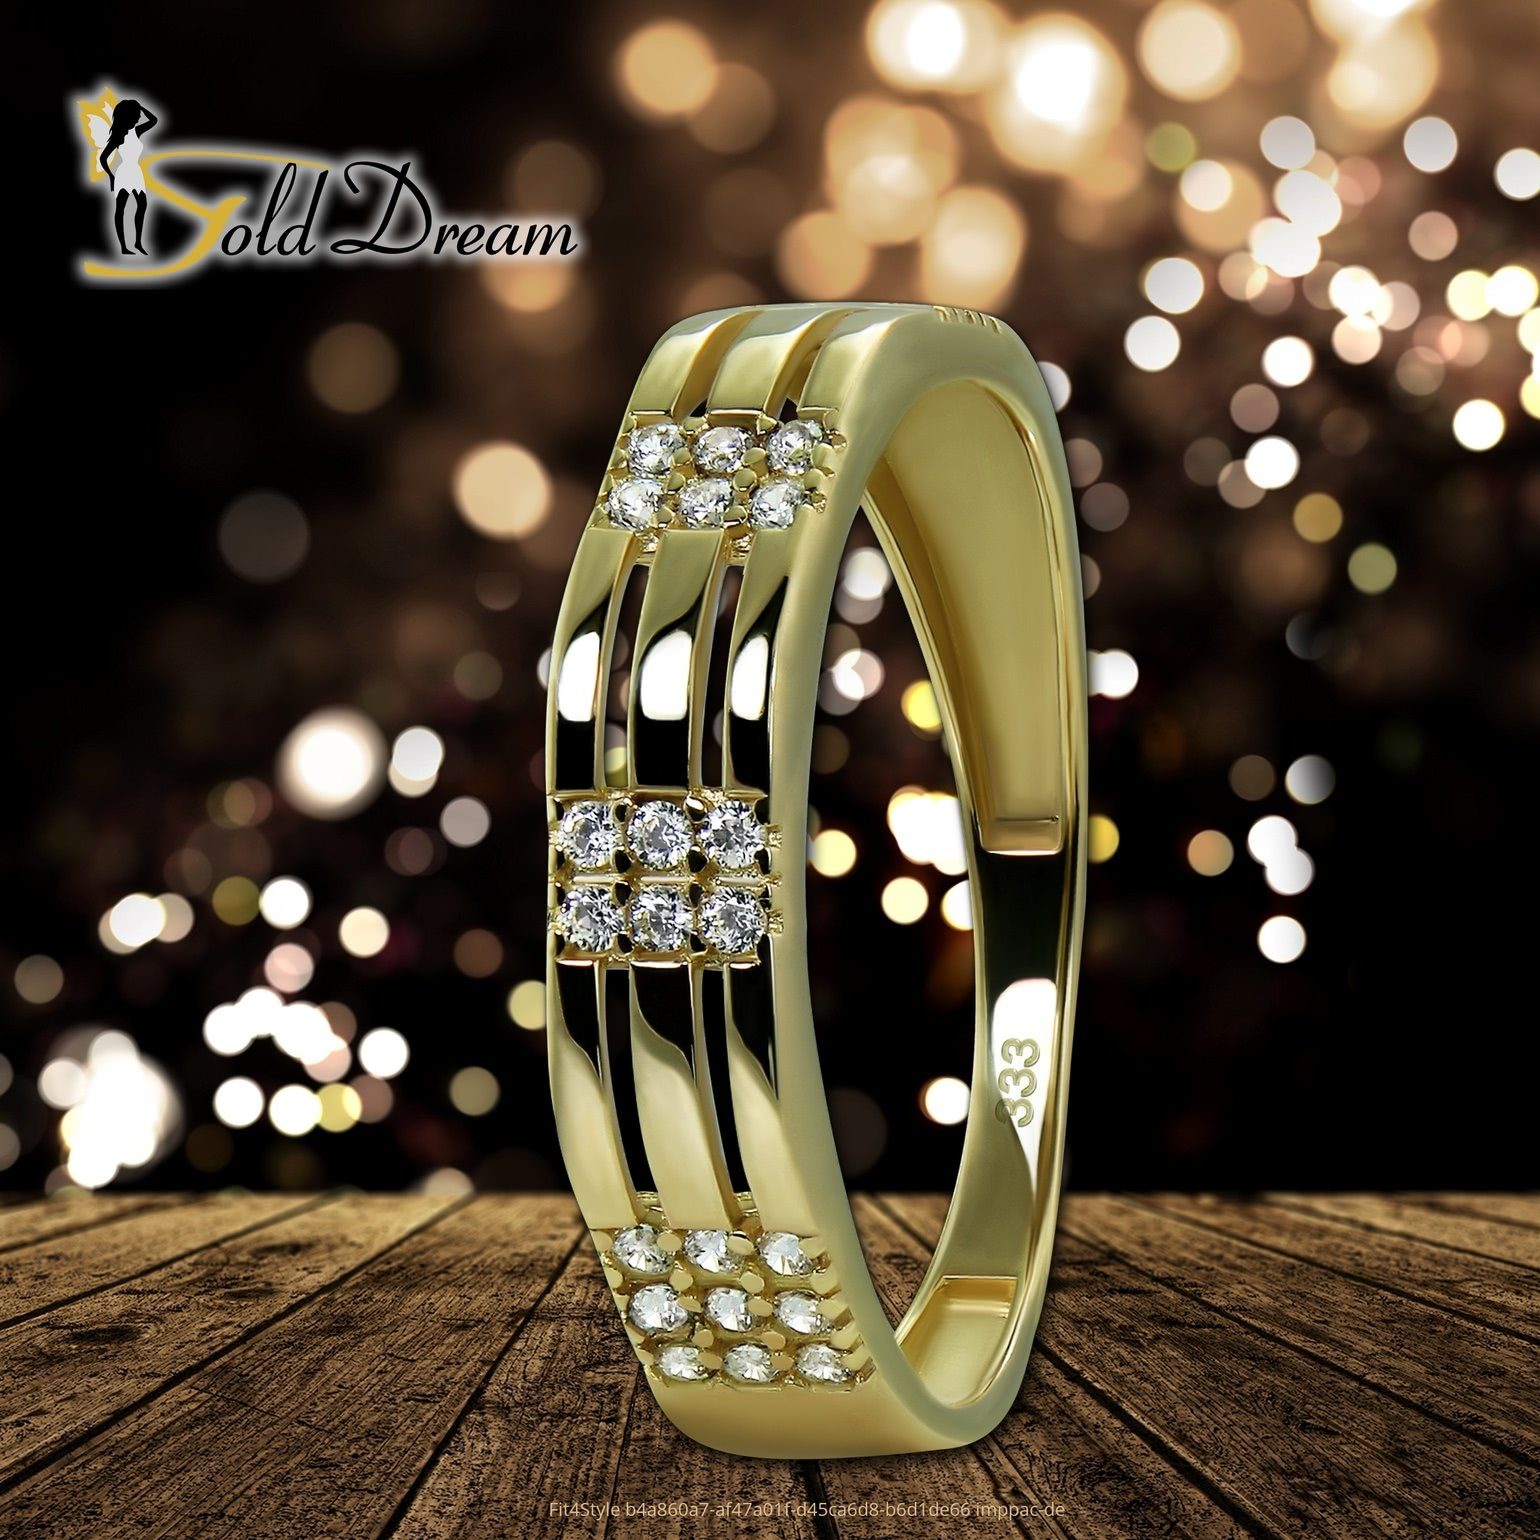 GoldDream Goldring GoldDream Gold Ring Karat, Damen gold, (Fingerring), Sparkle 333 Sparkle Gr.56 Farbe: 8 - Ring weiß Gelbgold